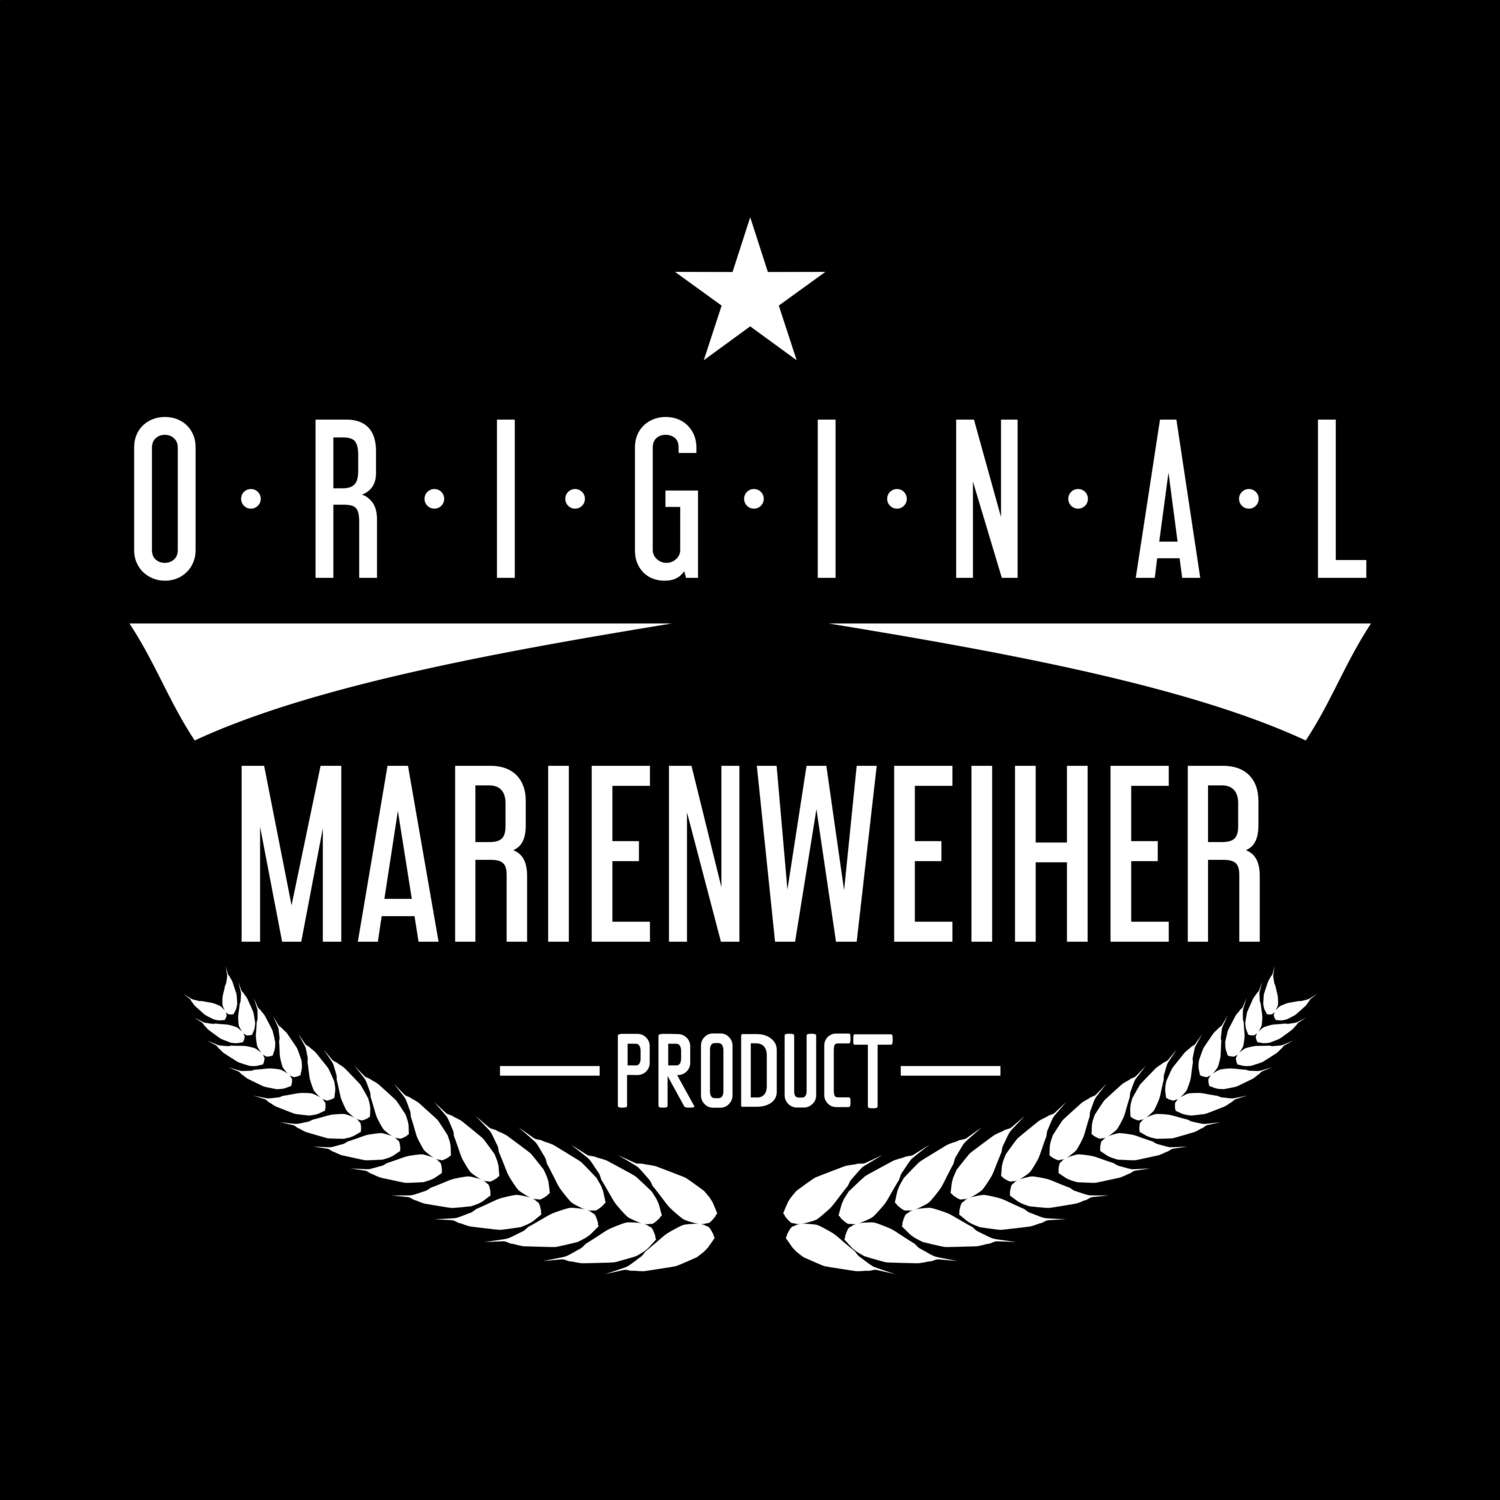 Marienweiher T-Shirt »Original Product«